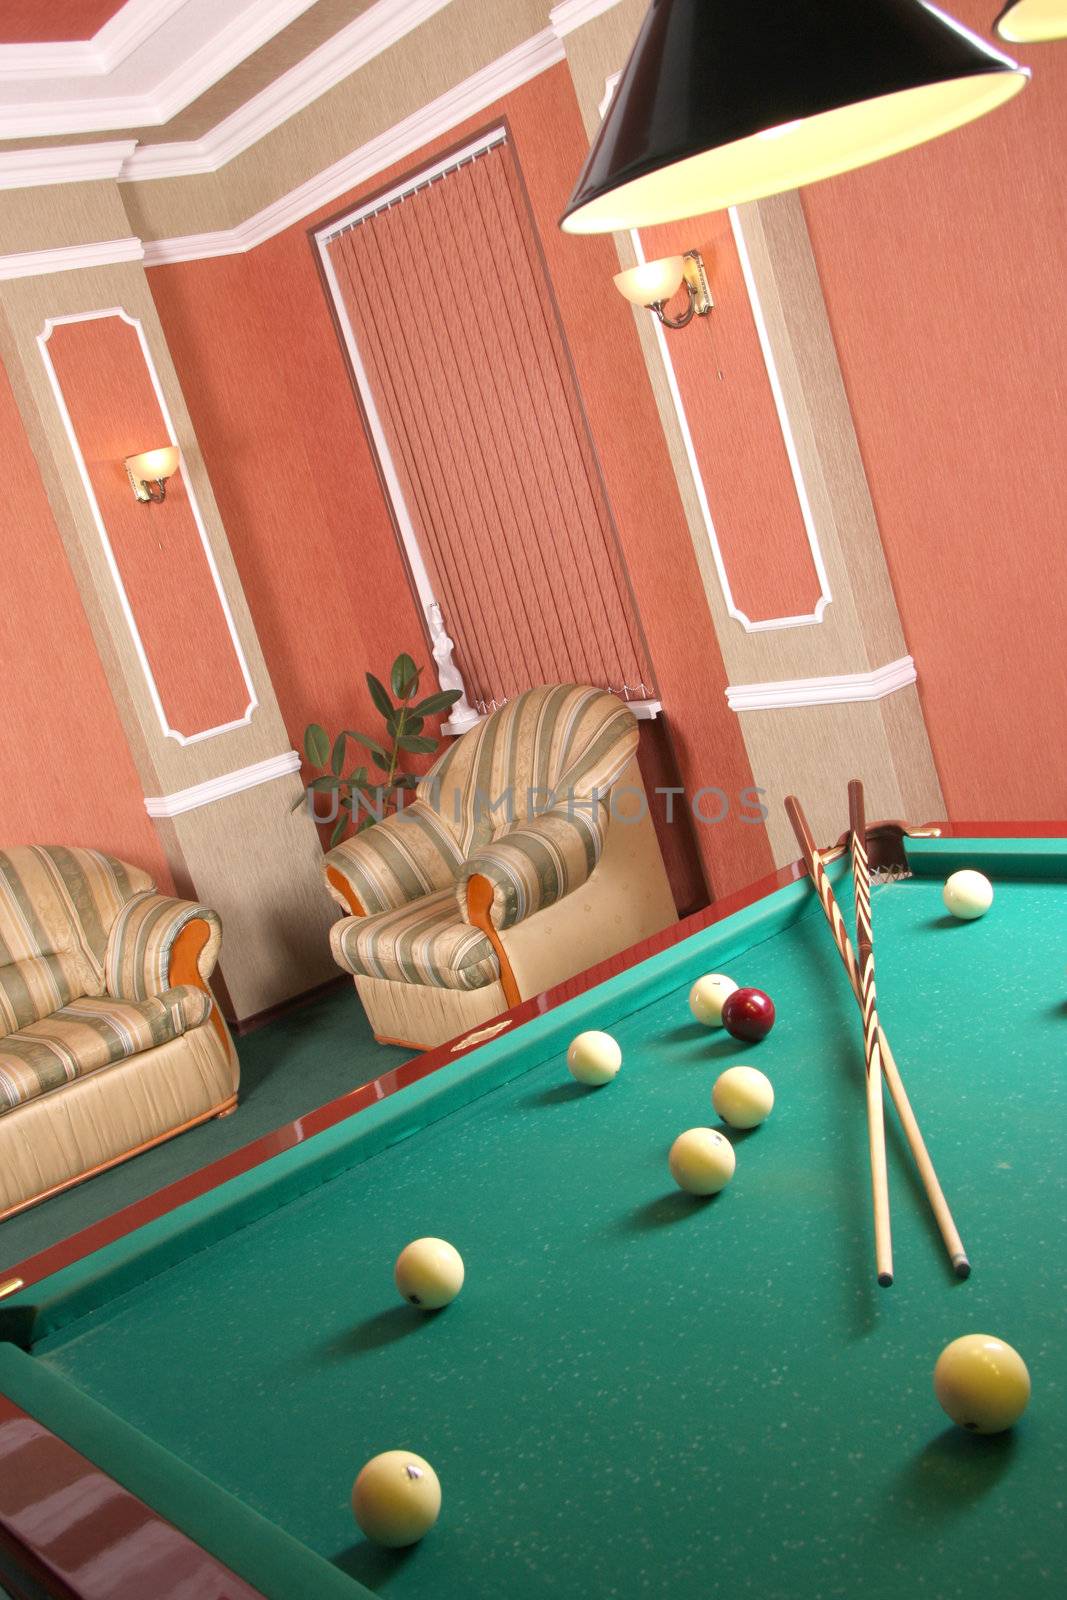 table for game in billiards in interior